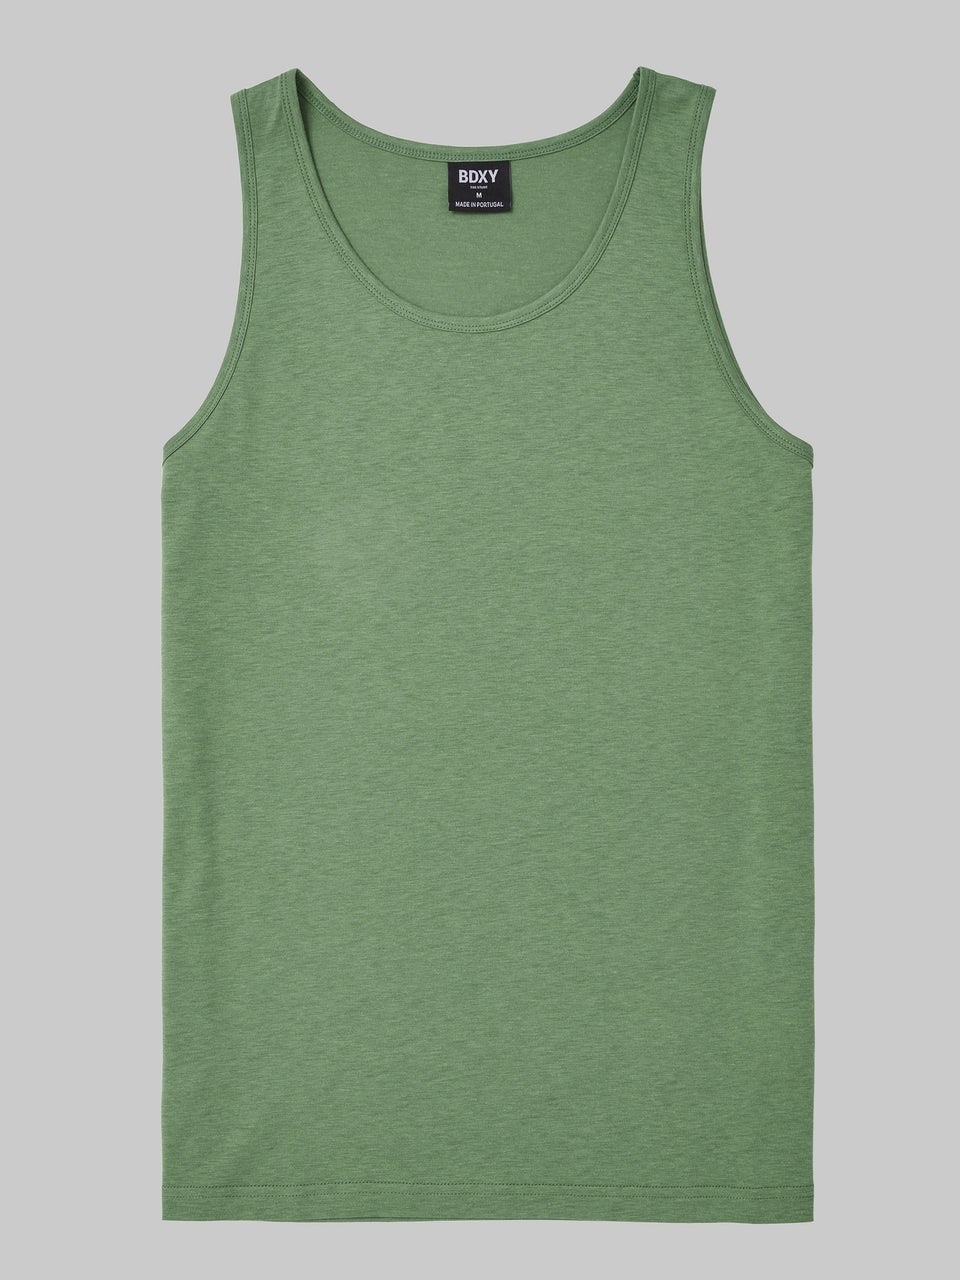 'The Stunt' Vest Green